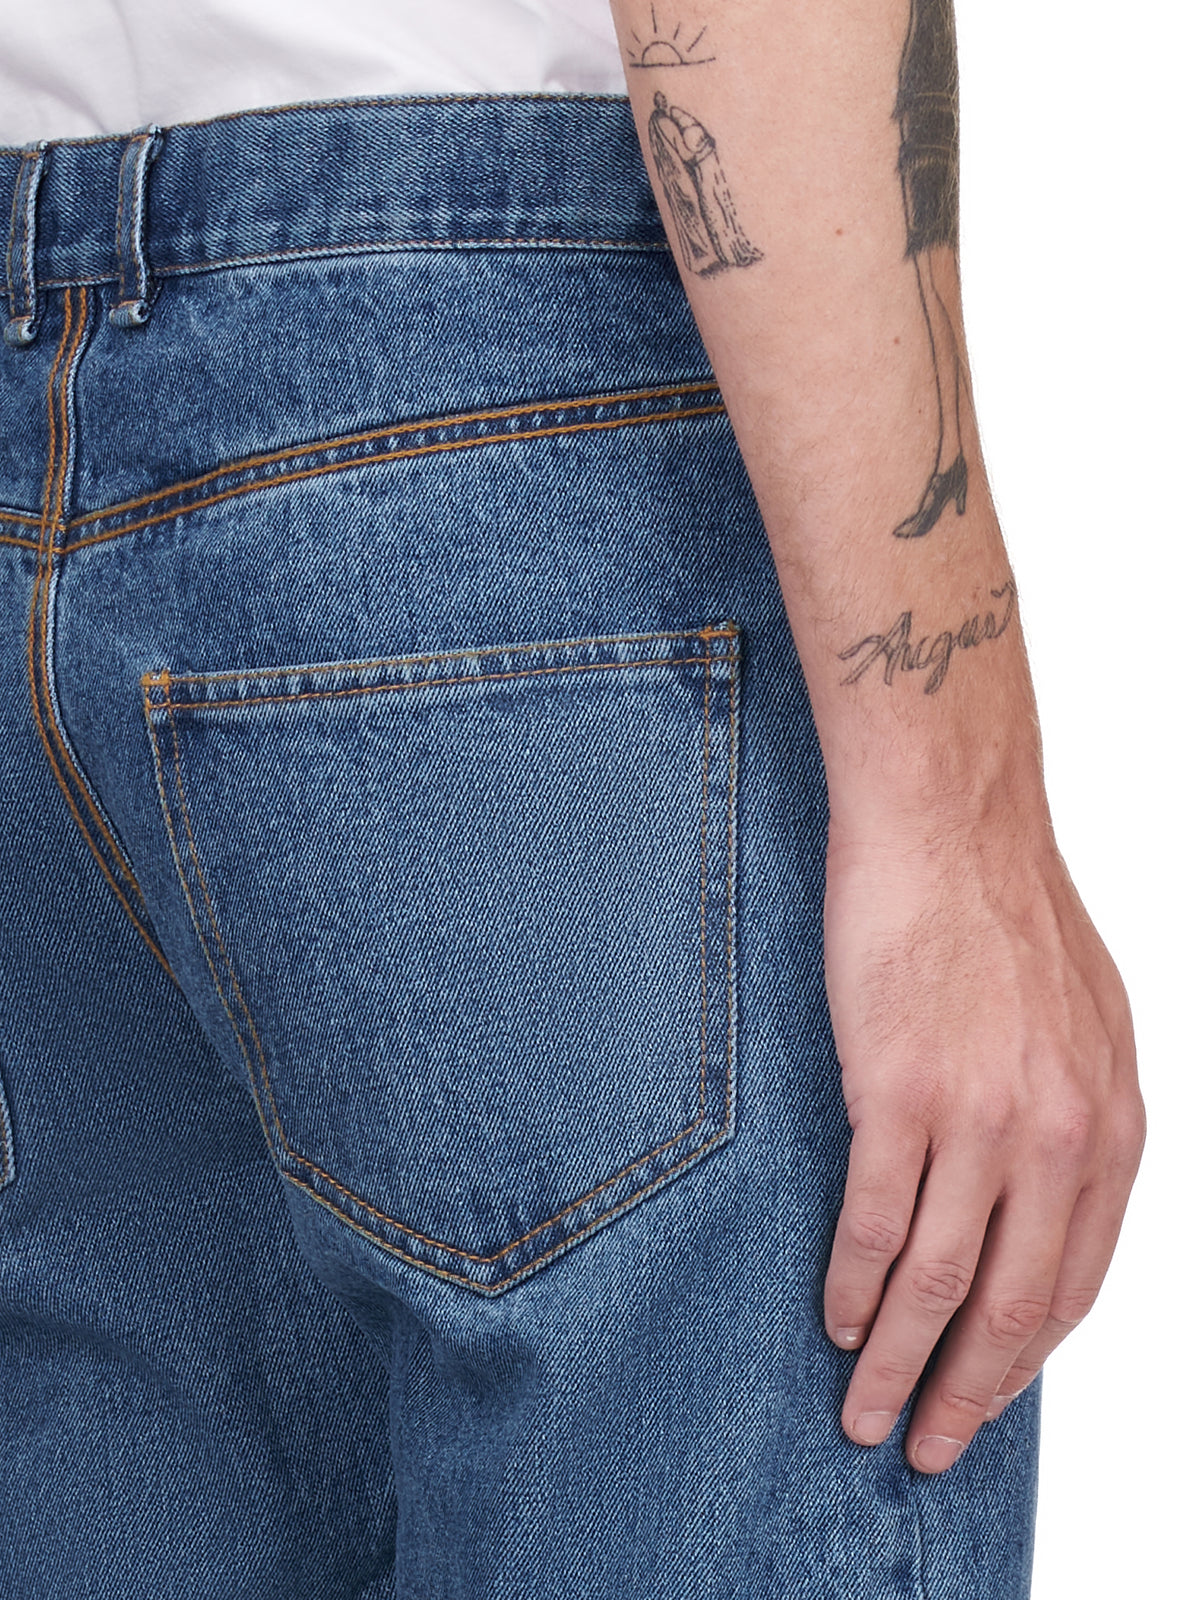 Kanghyuk Dual Drawcord Jeans | H. Lorenzo - detail 2